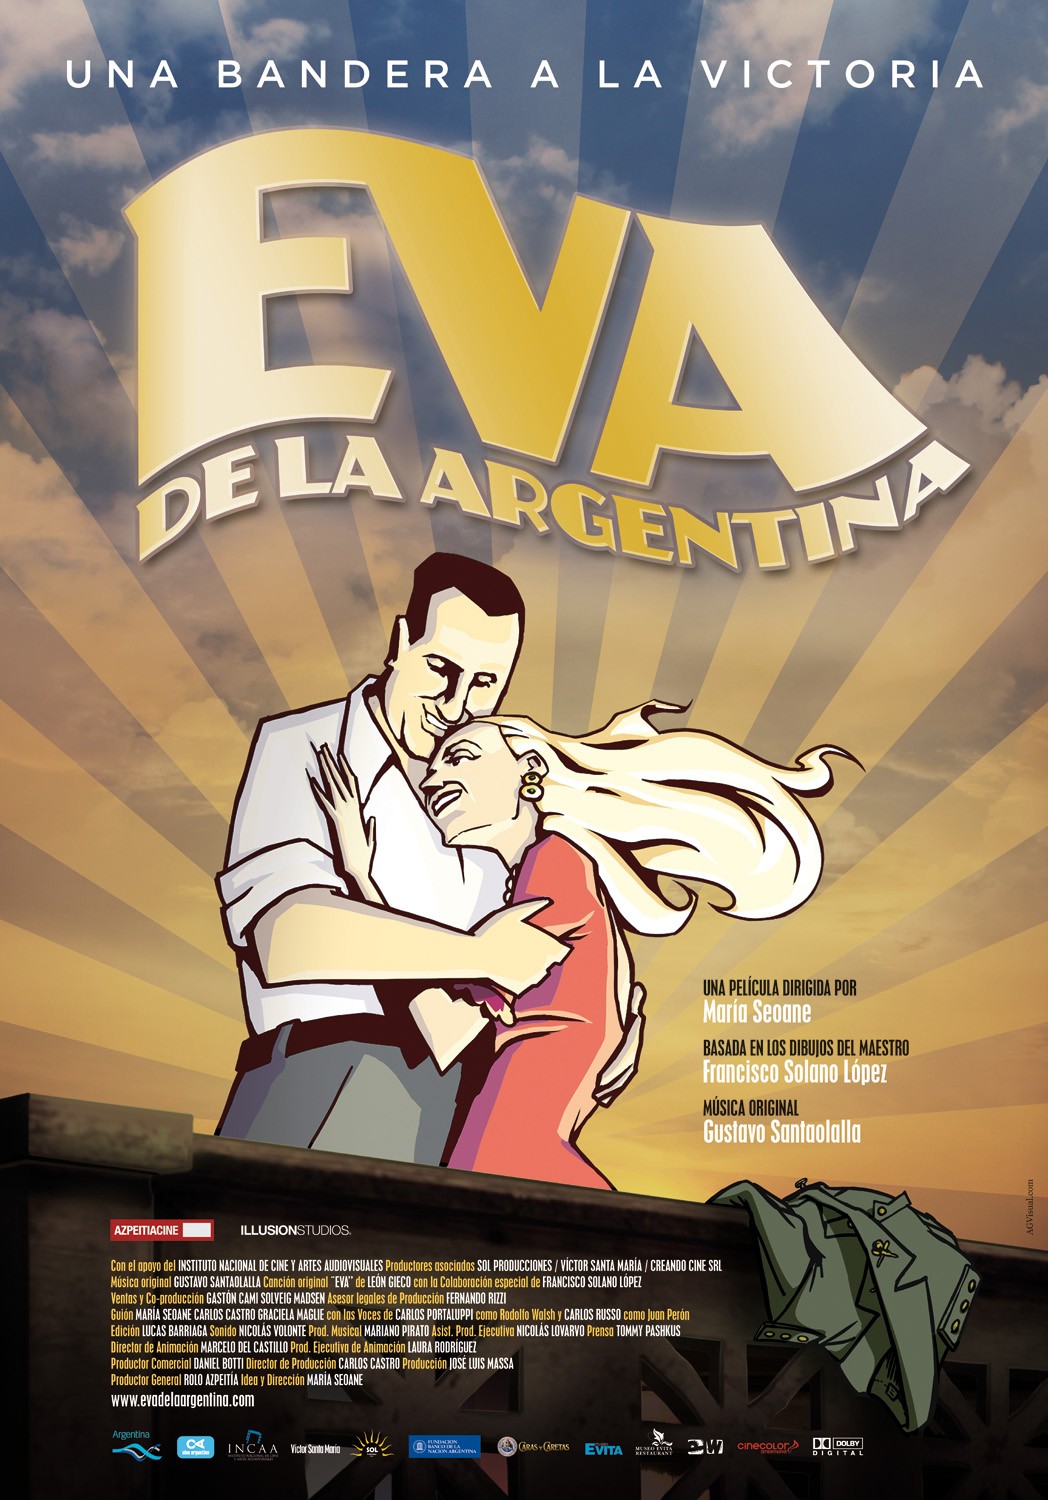 Extra Large Movie Poster Image for Eva de la argentina 